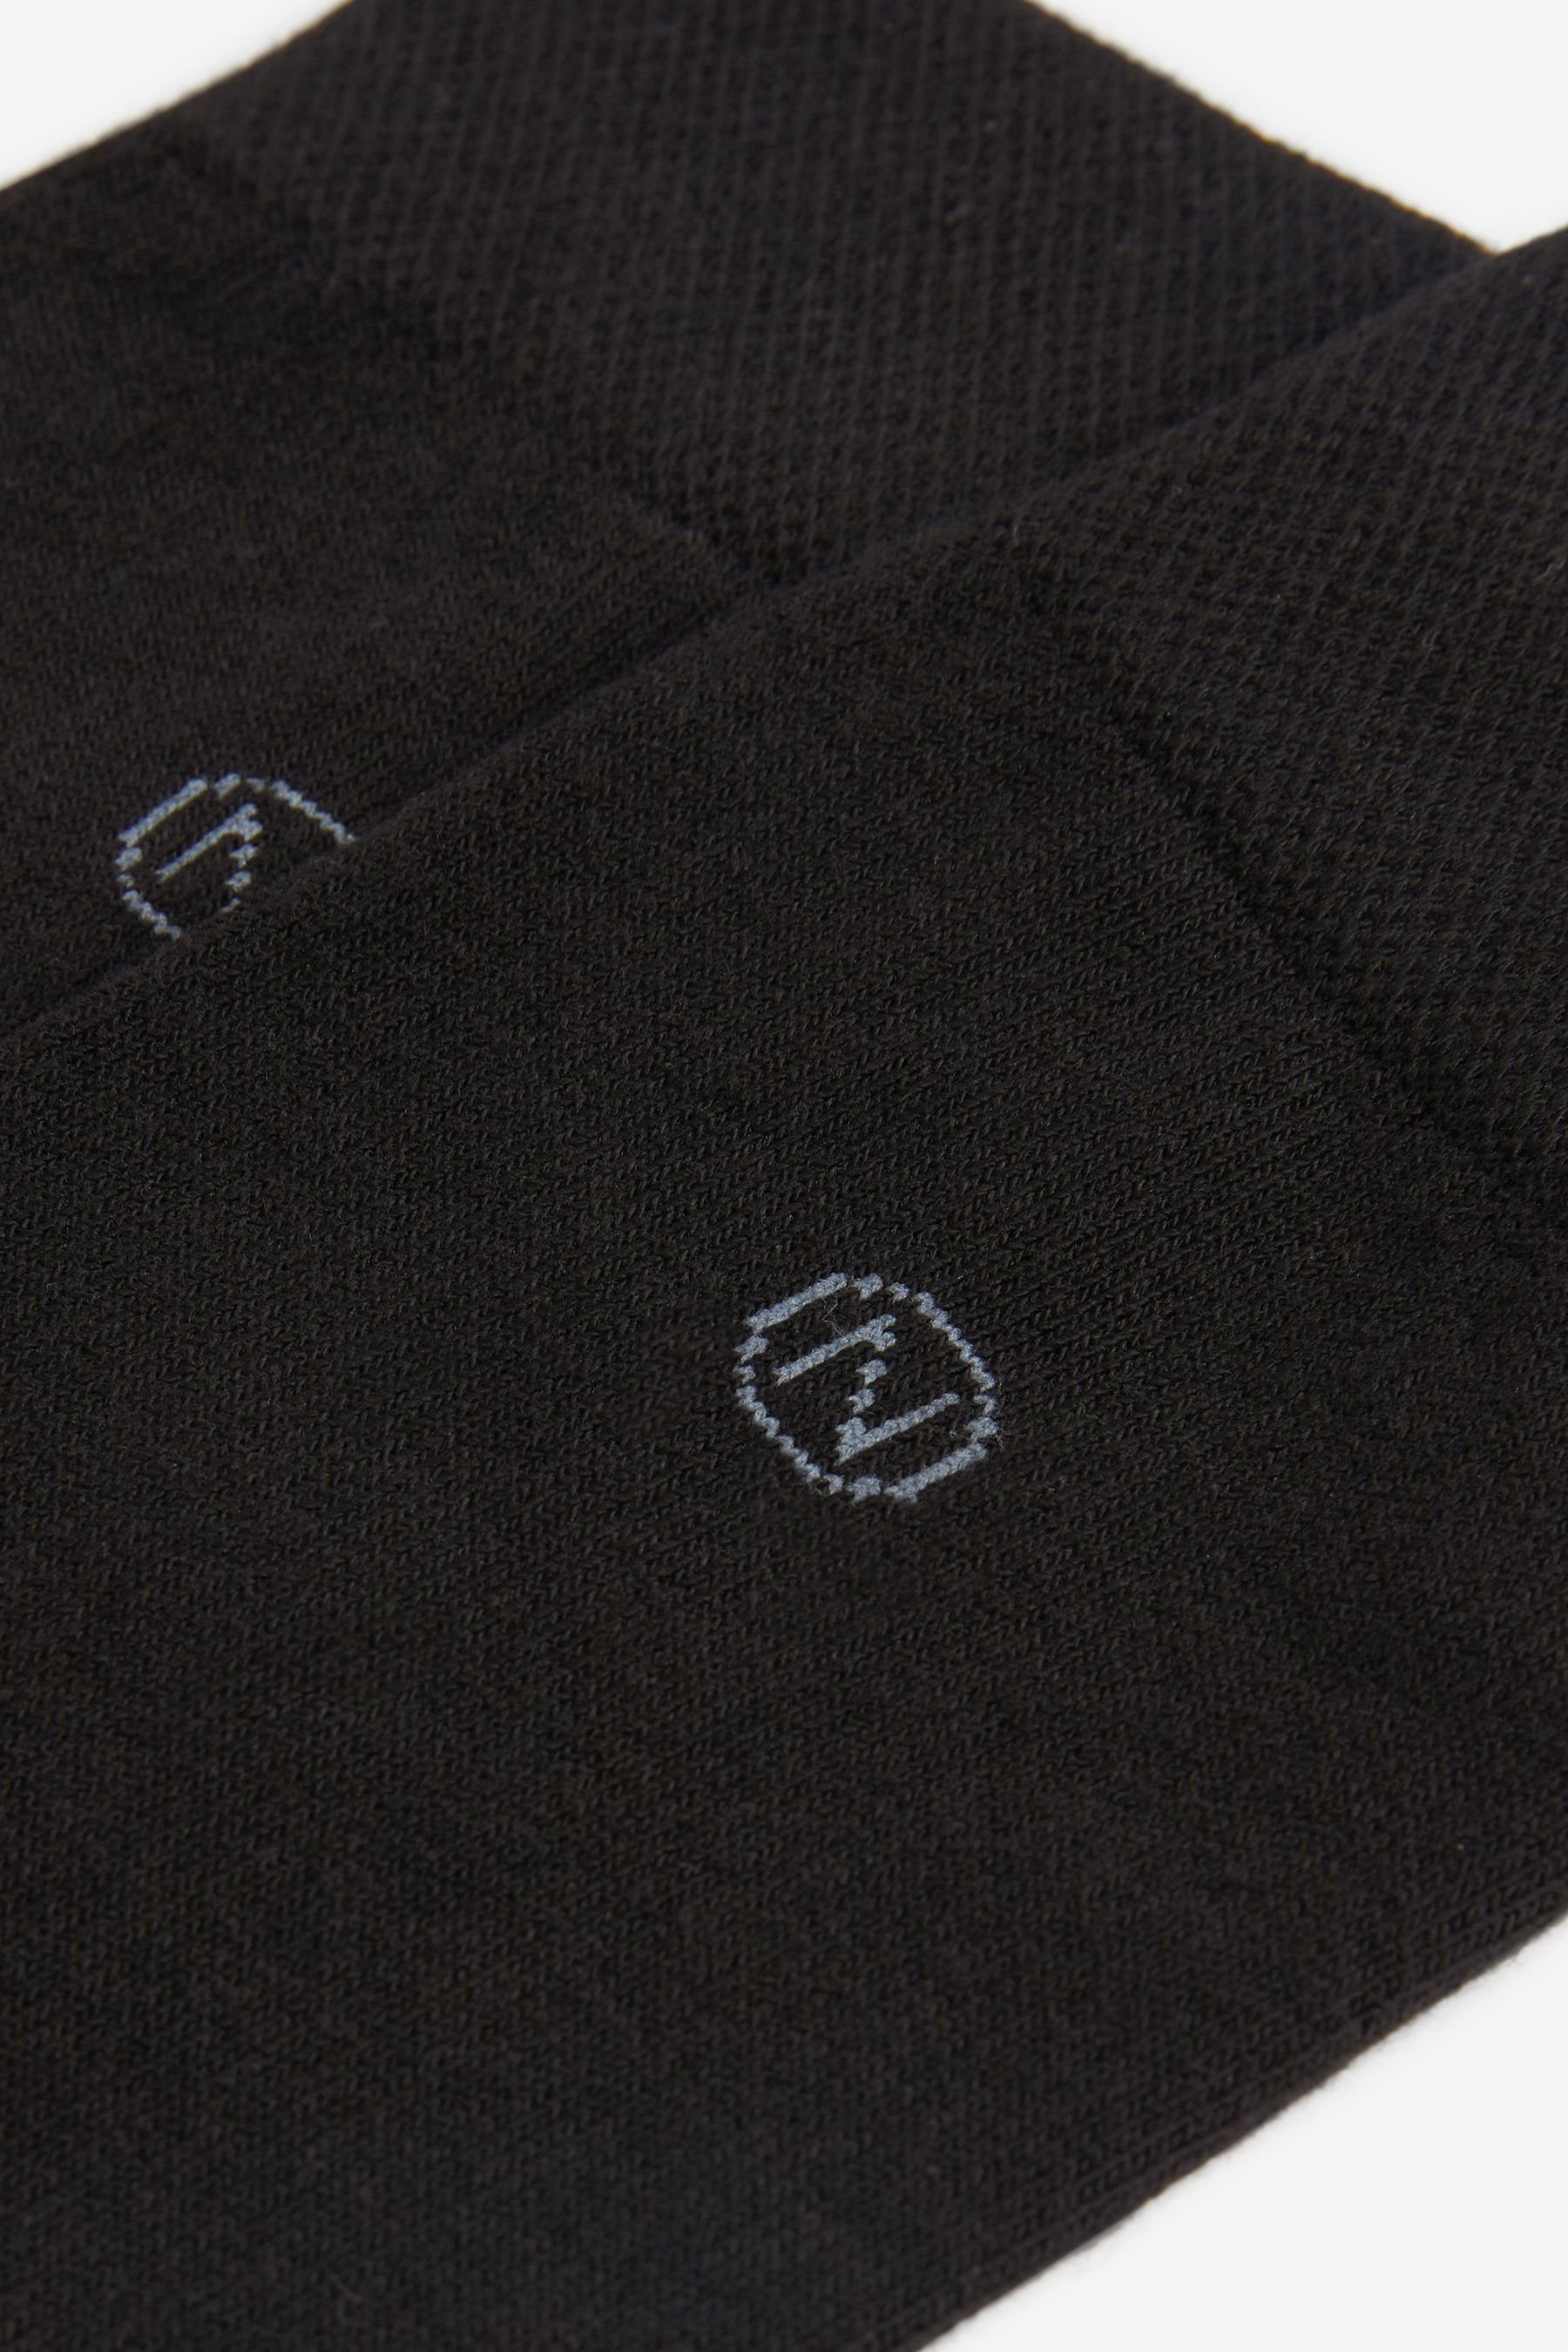 Sohle Black Next 5er-Pack Kurzsocken Socken (5-Paar) mit gepolsterter